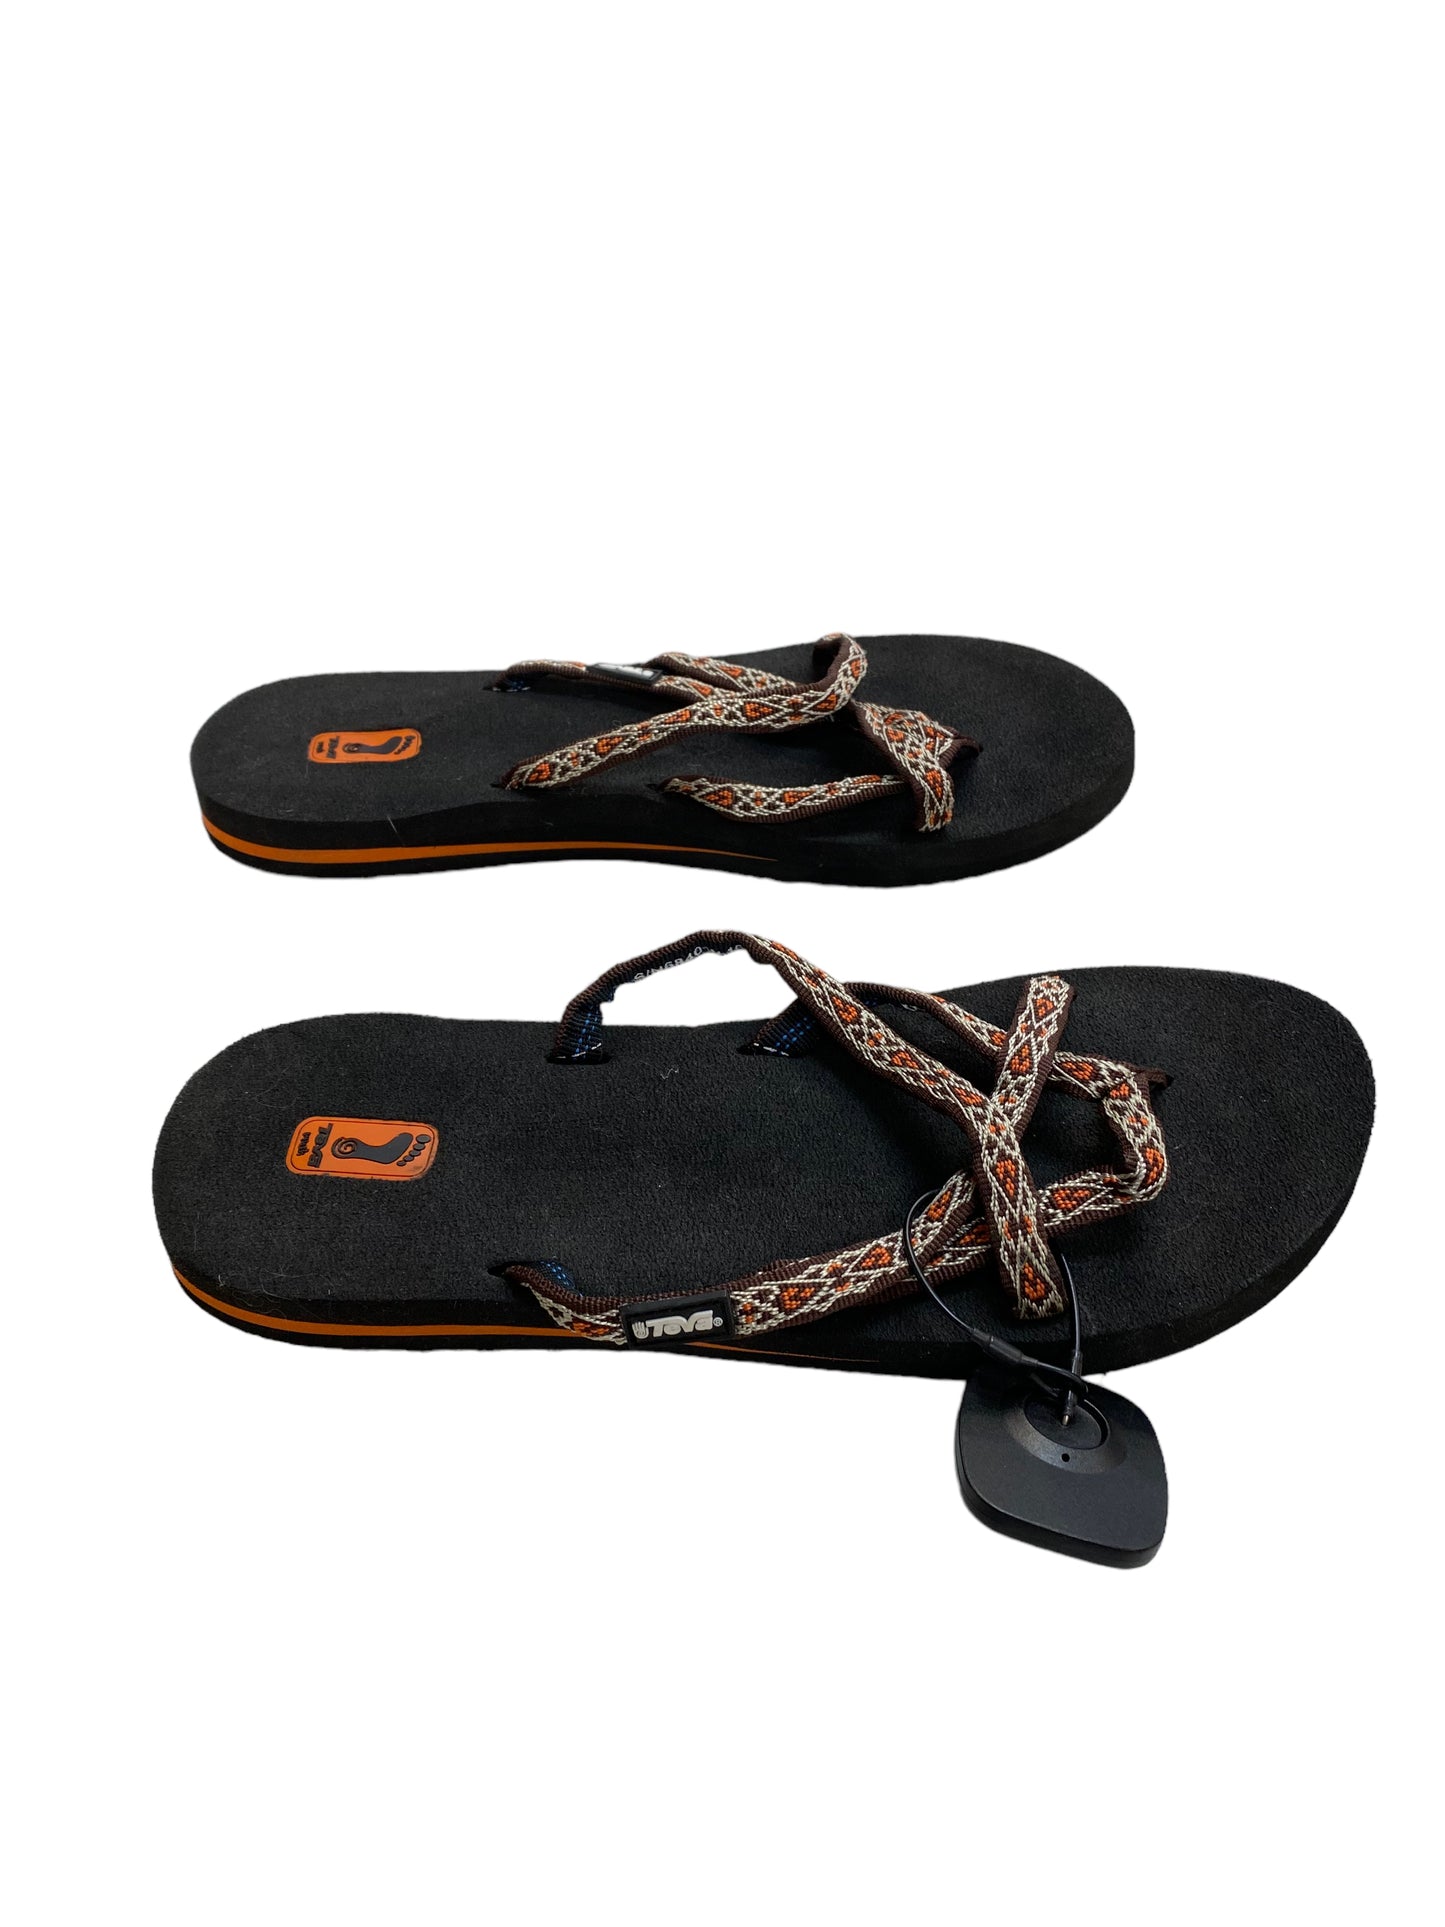 Multi-colored Sandals Flip Flops Teva, Size 10